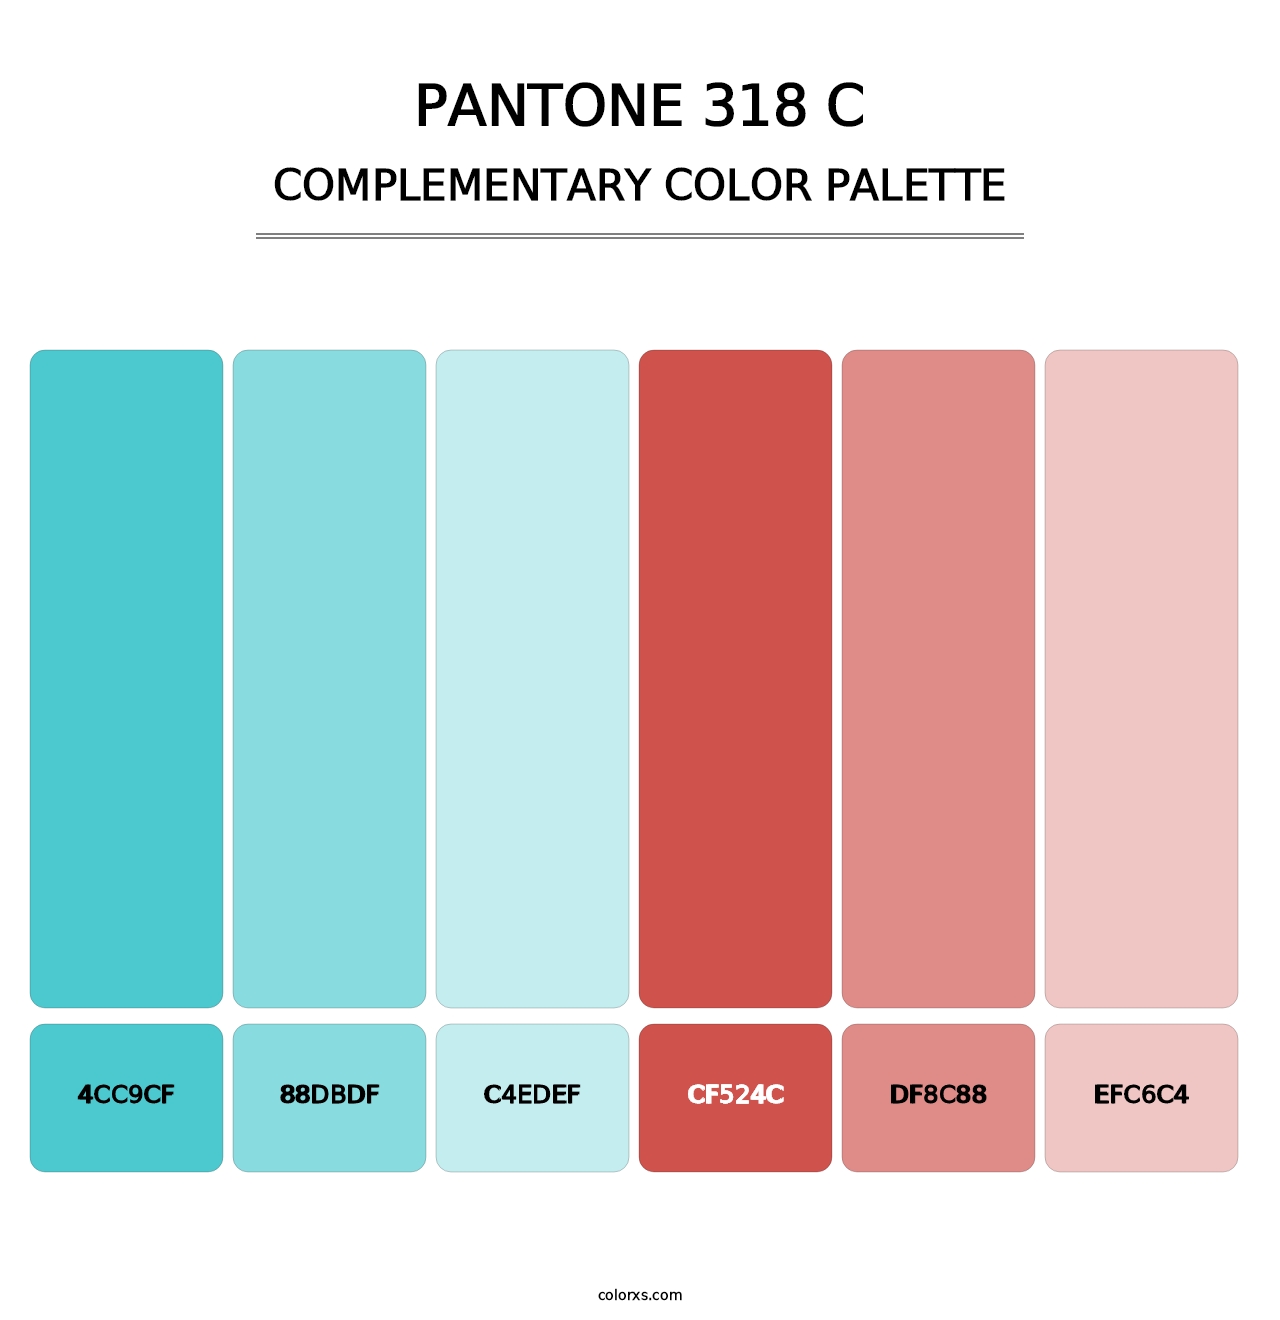 PANTONE 318 C - Complementary Color Palette